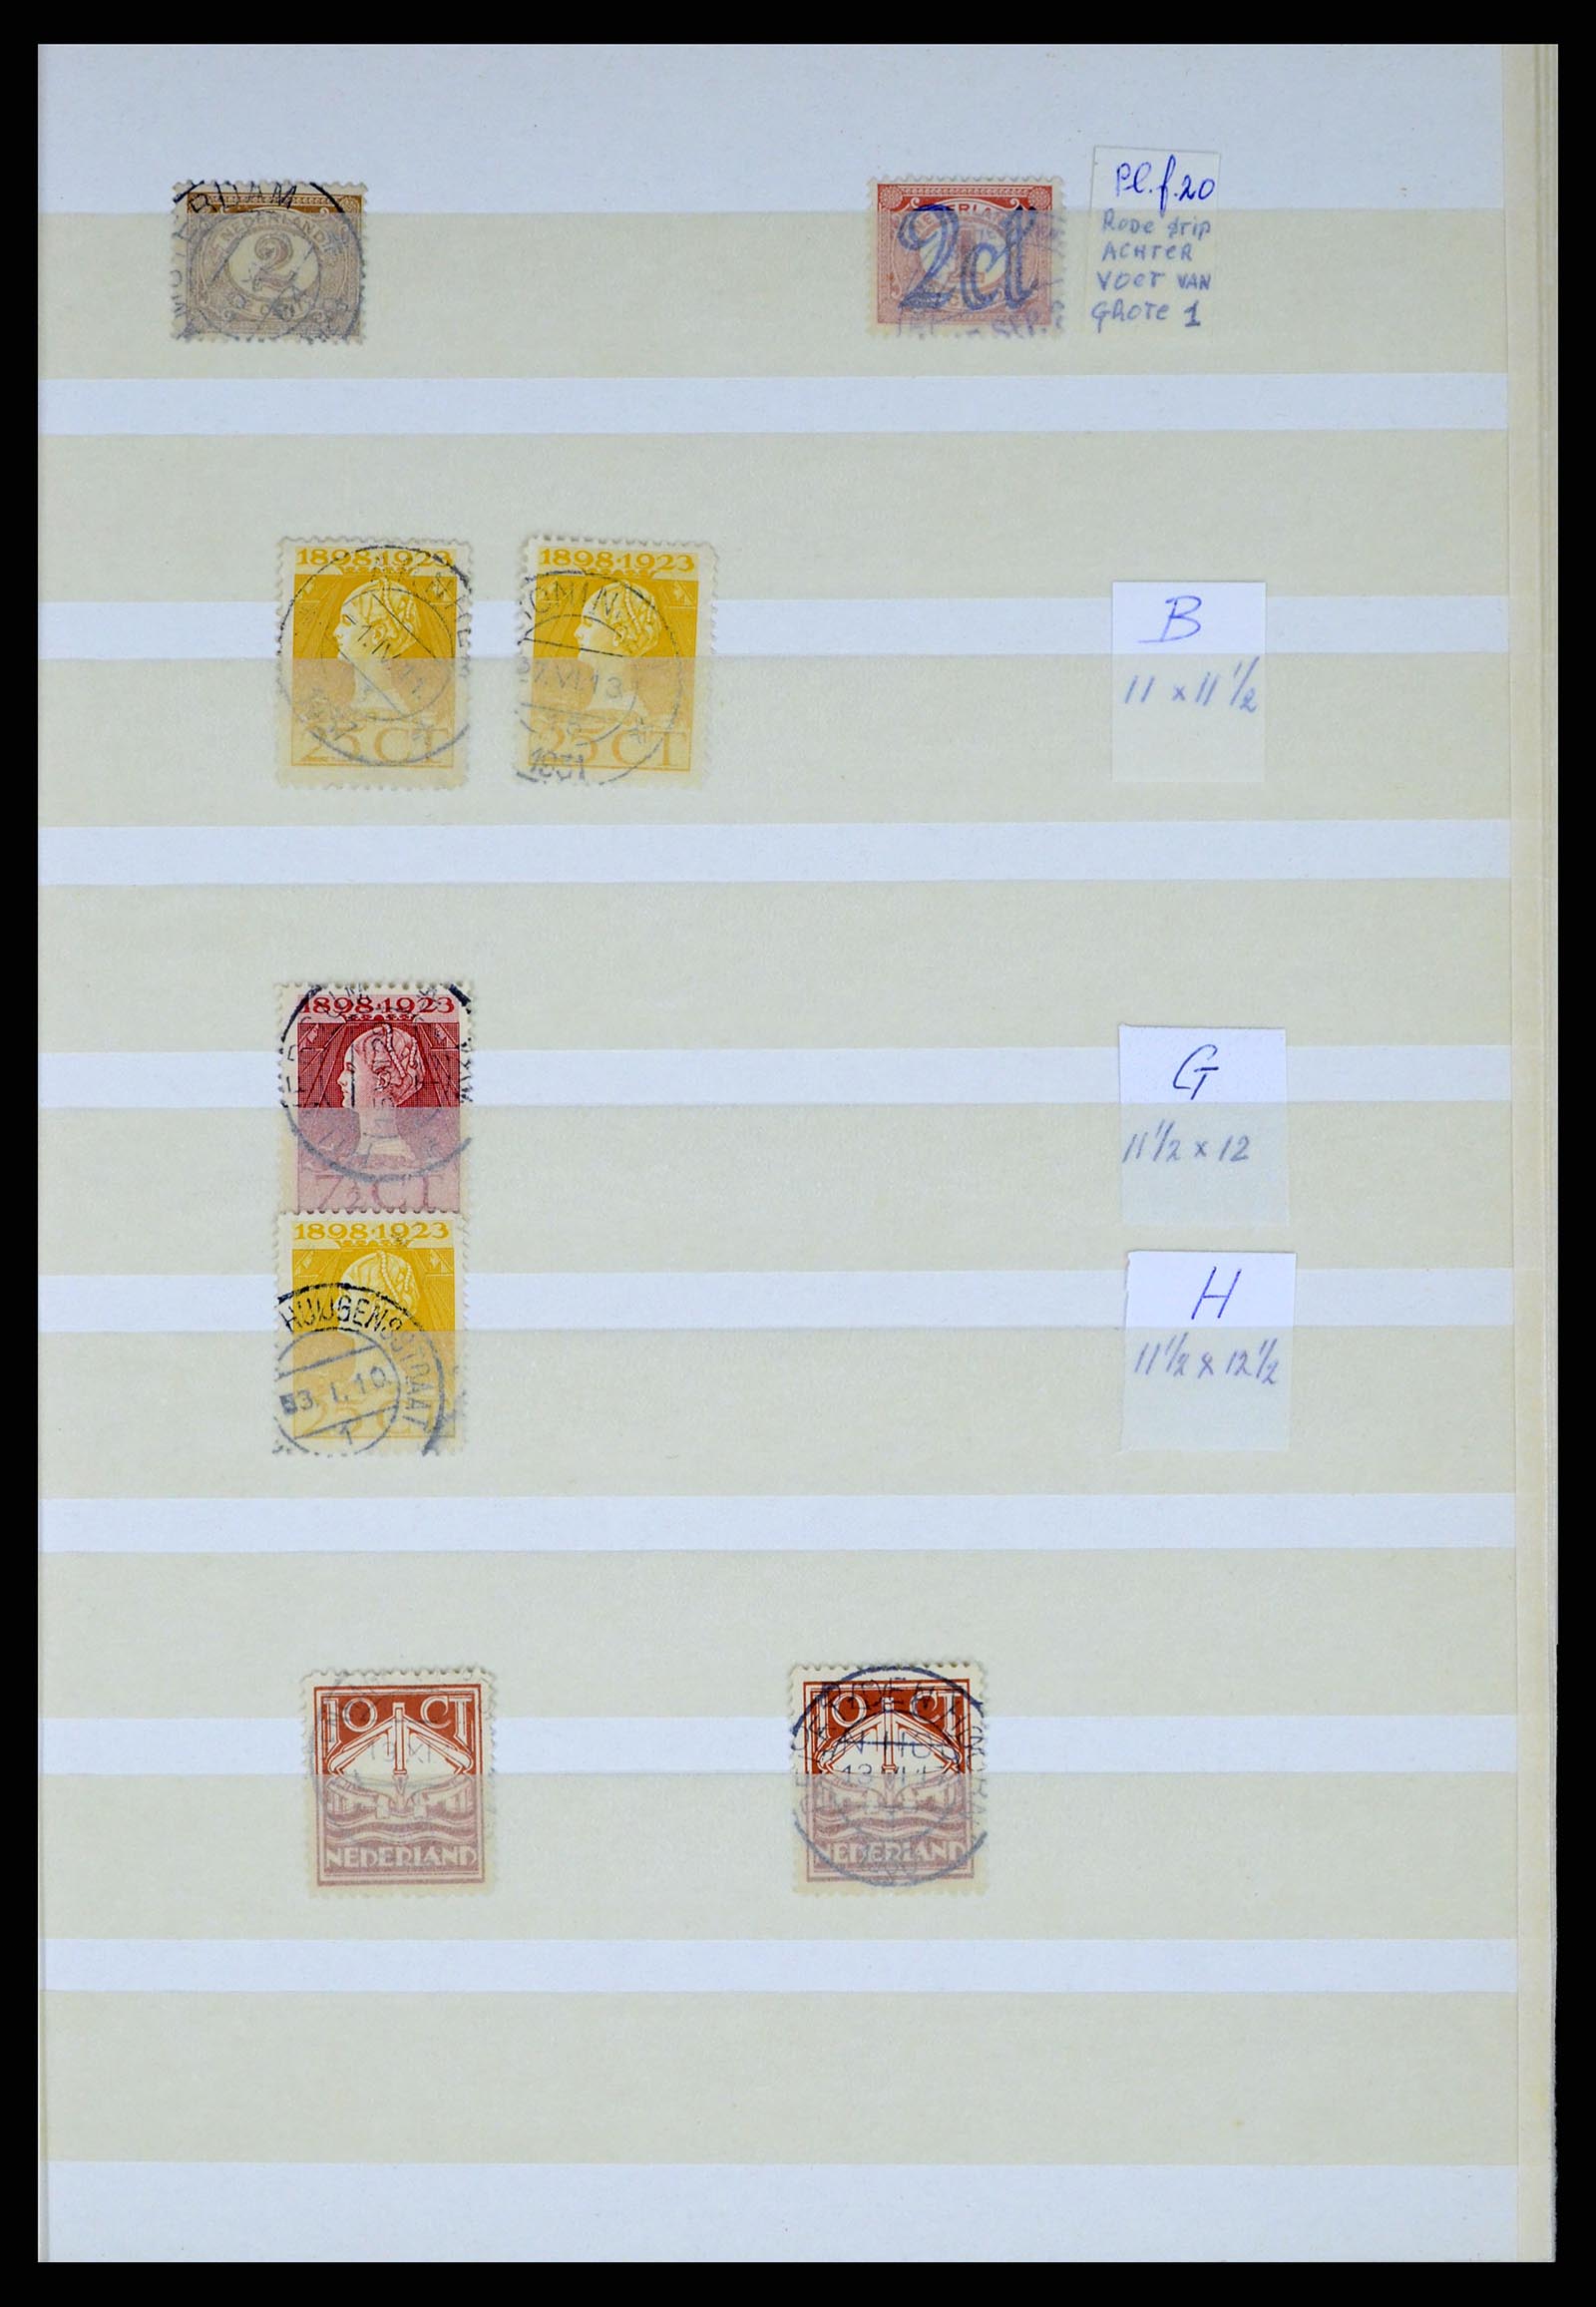 37424 003 - Stamp collection 37424 Netherlands shortbar cancels.